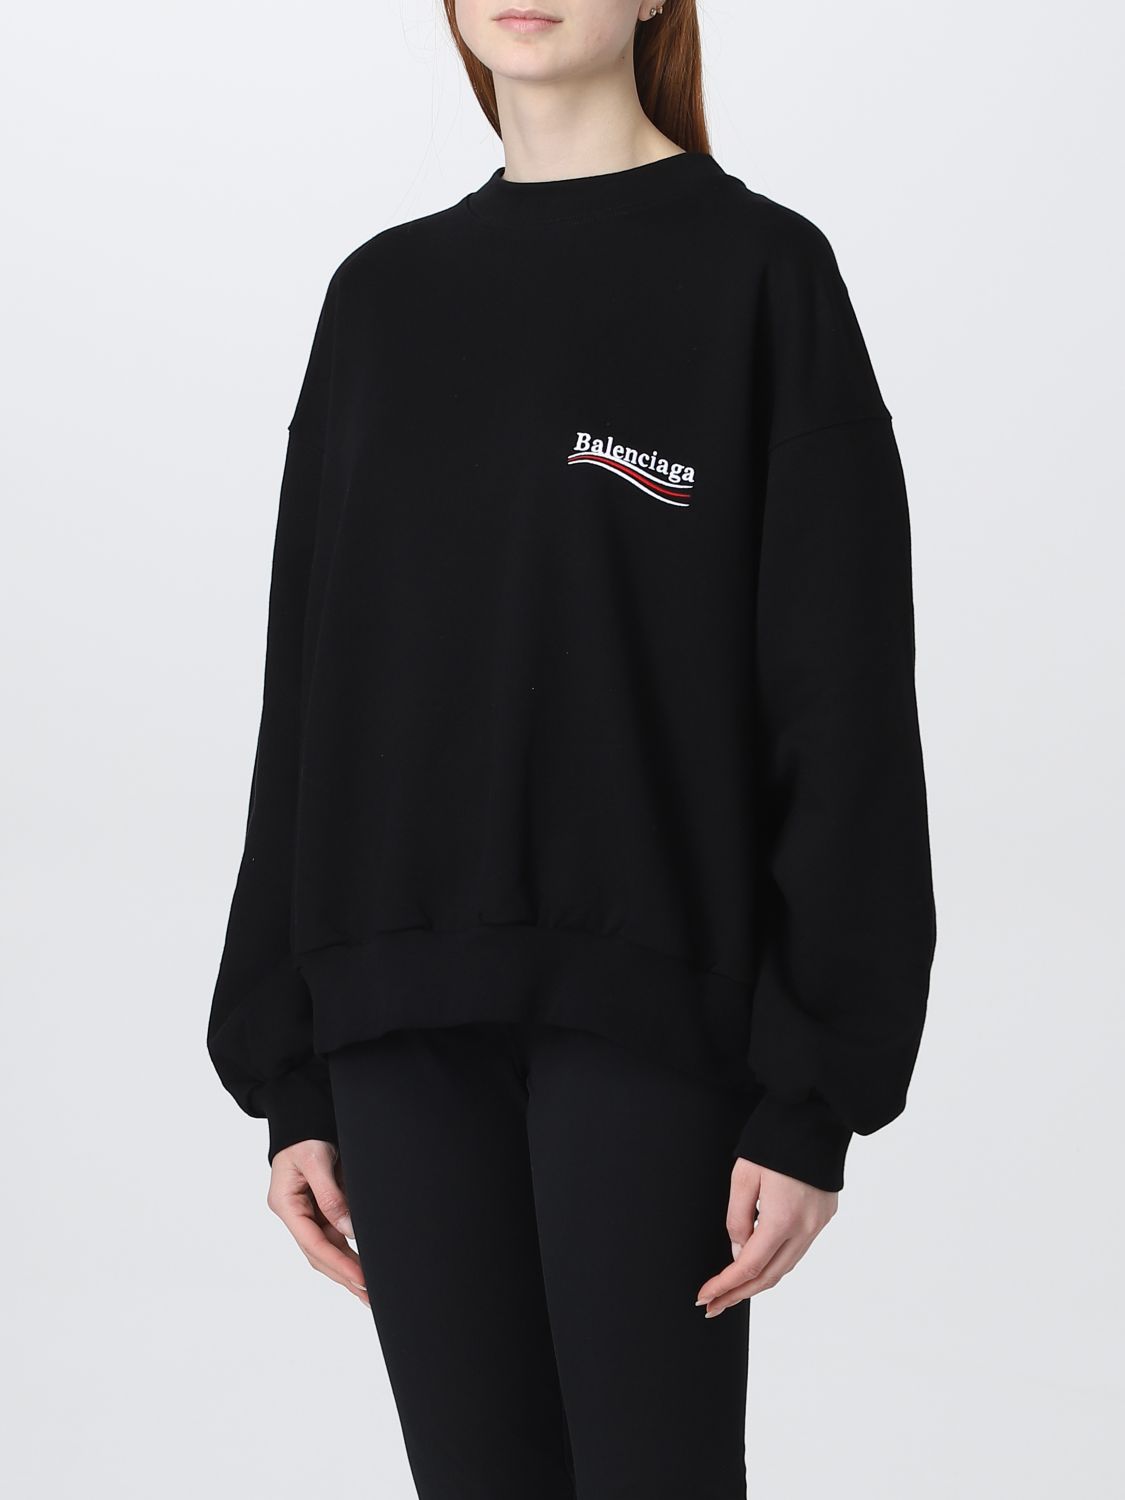 BALENCIAGA: sweatshirt - Black | Balenciaga sweatshirt 697869 TKVI9 online on GIGLIO.COM